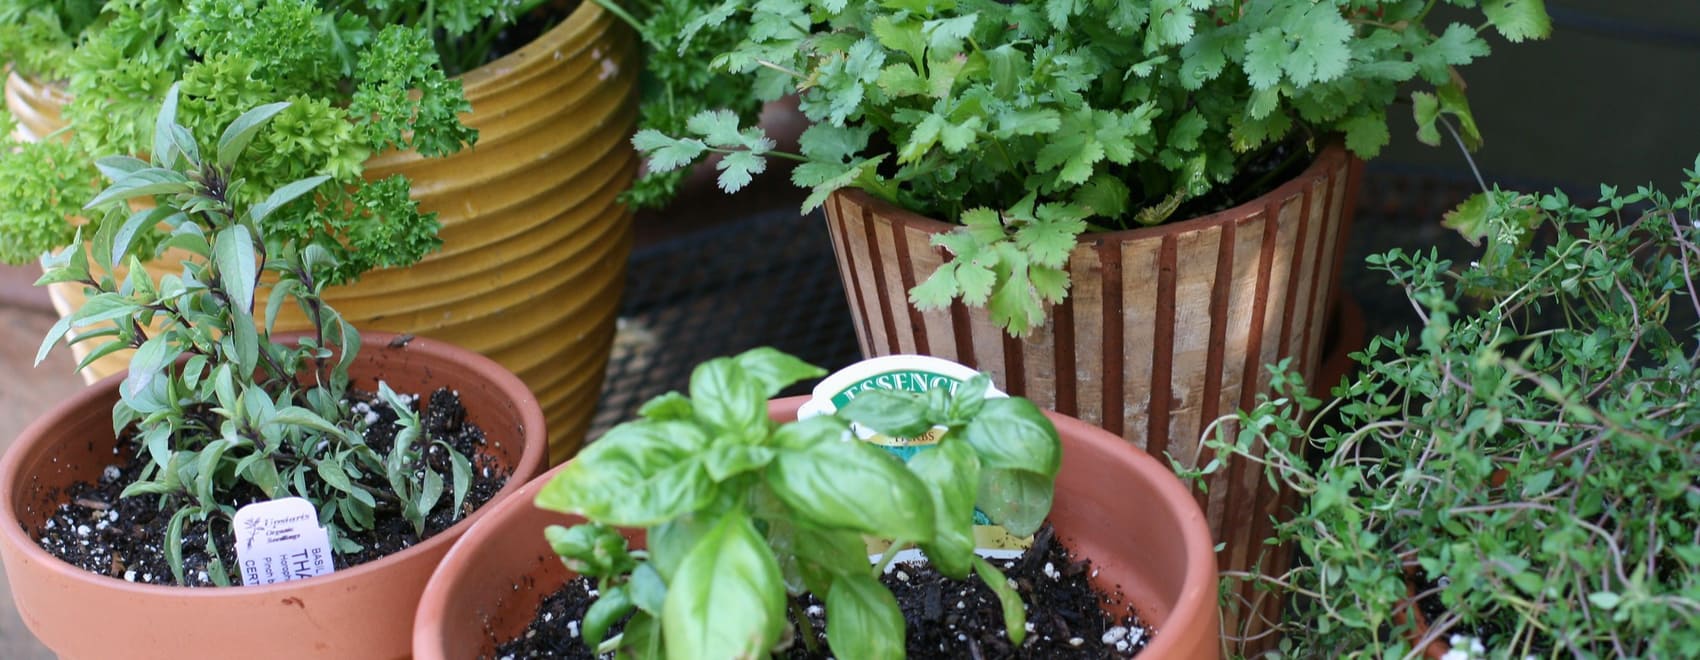 18 Best Herb Garden Ideas & How to Start a Herb Garden